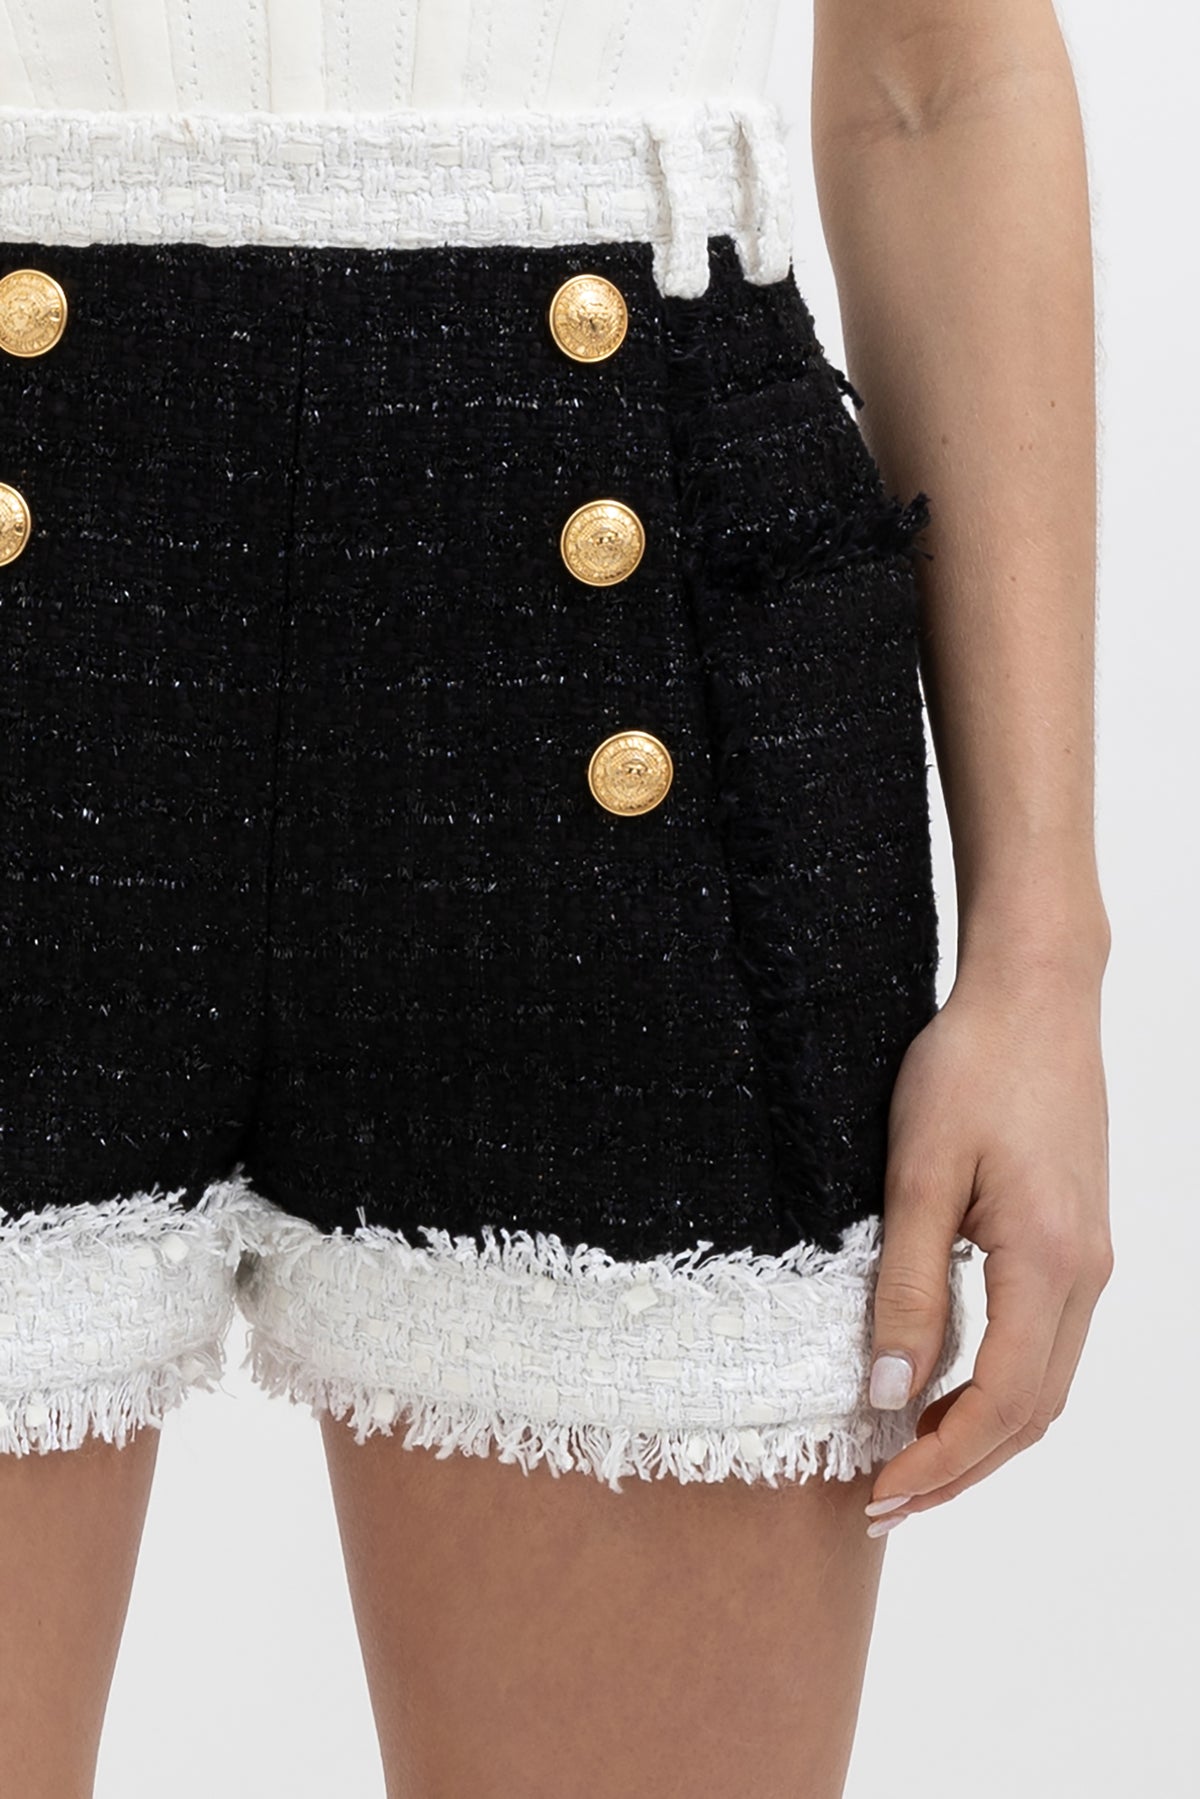 Tweed Contrast Shorts